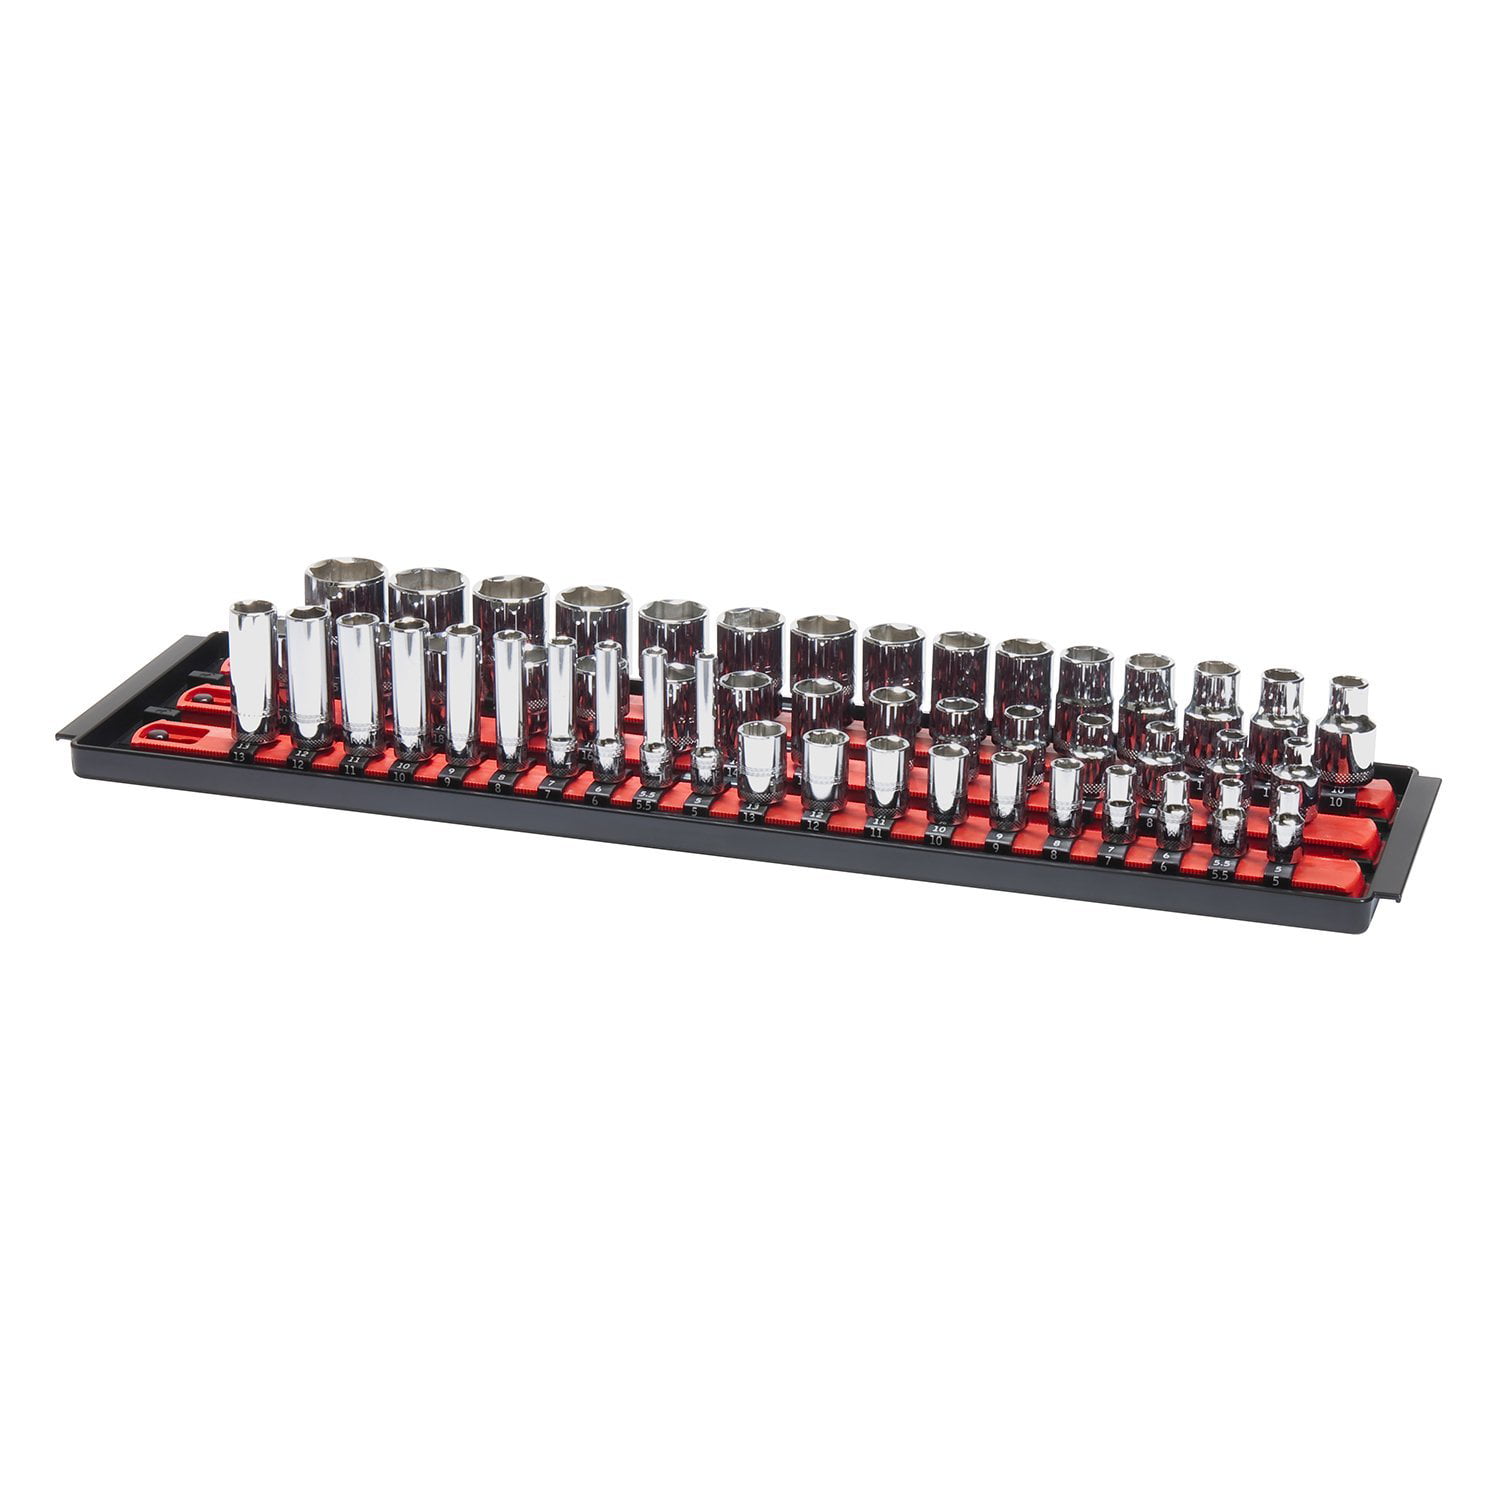 ernst mfg 8455 BL socket boss high-density Tray w/ 2 1/4" socket rail system 